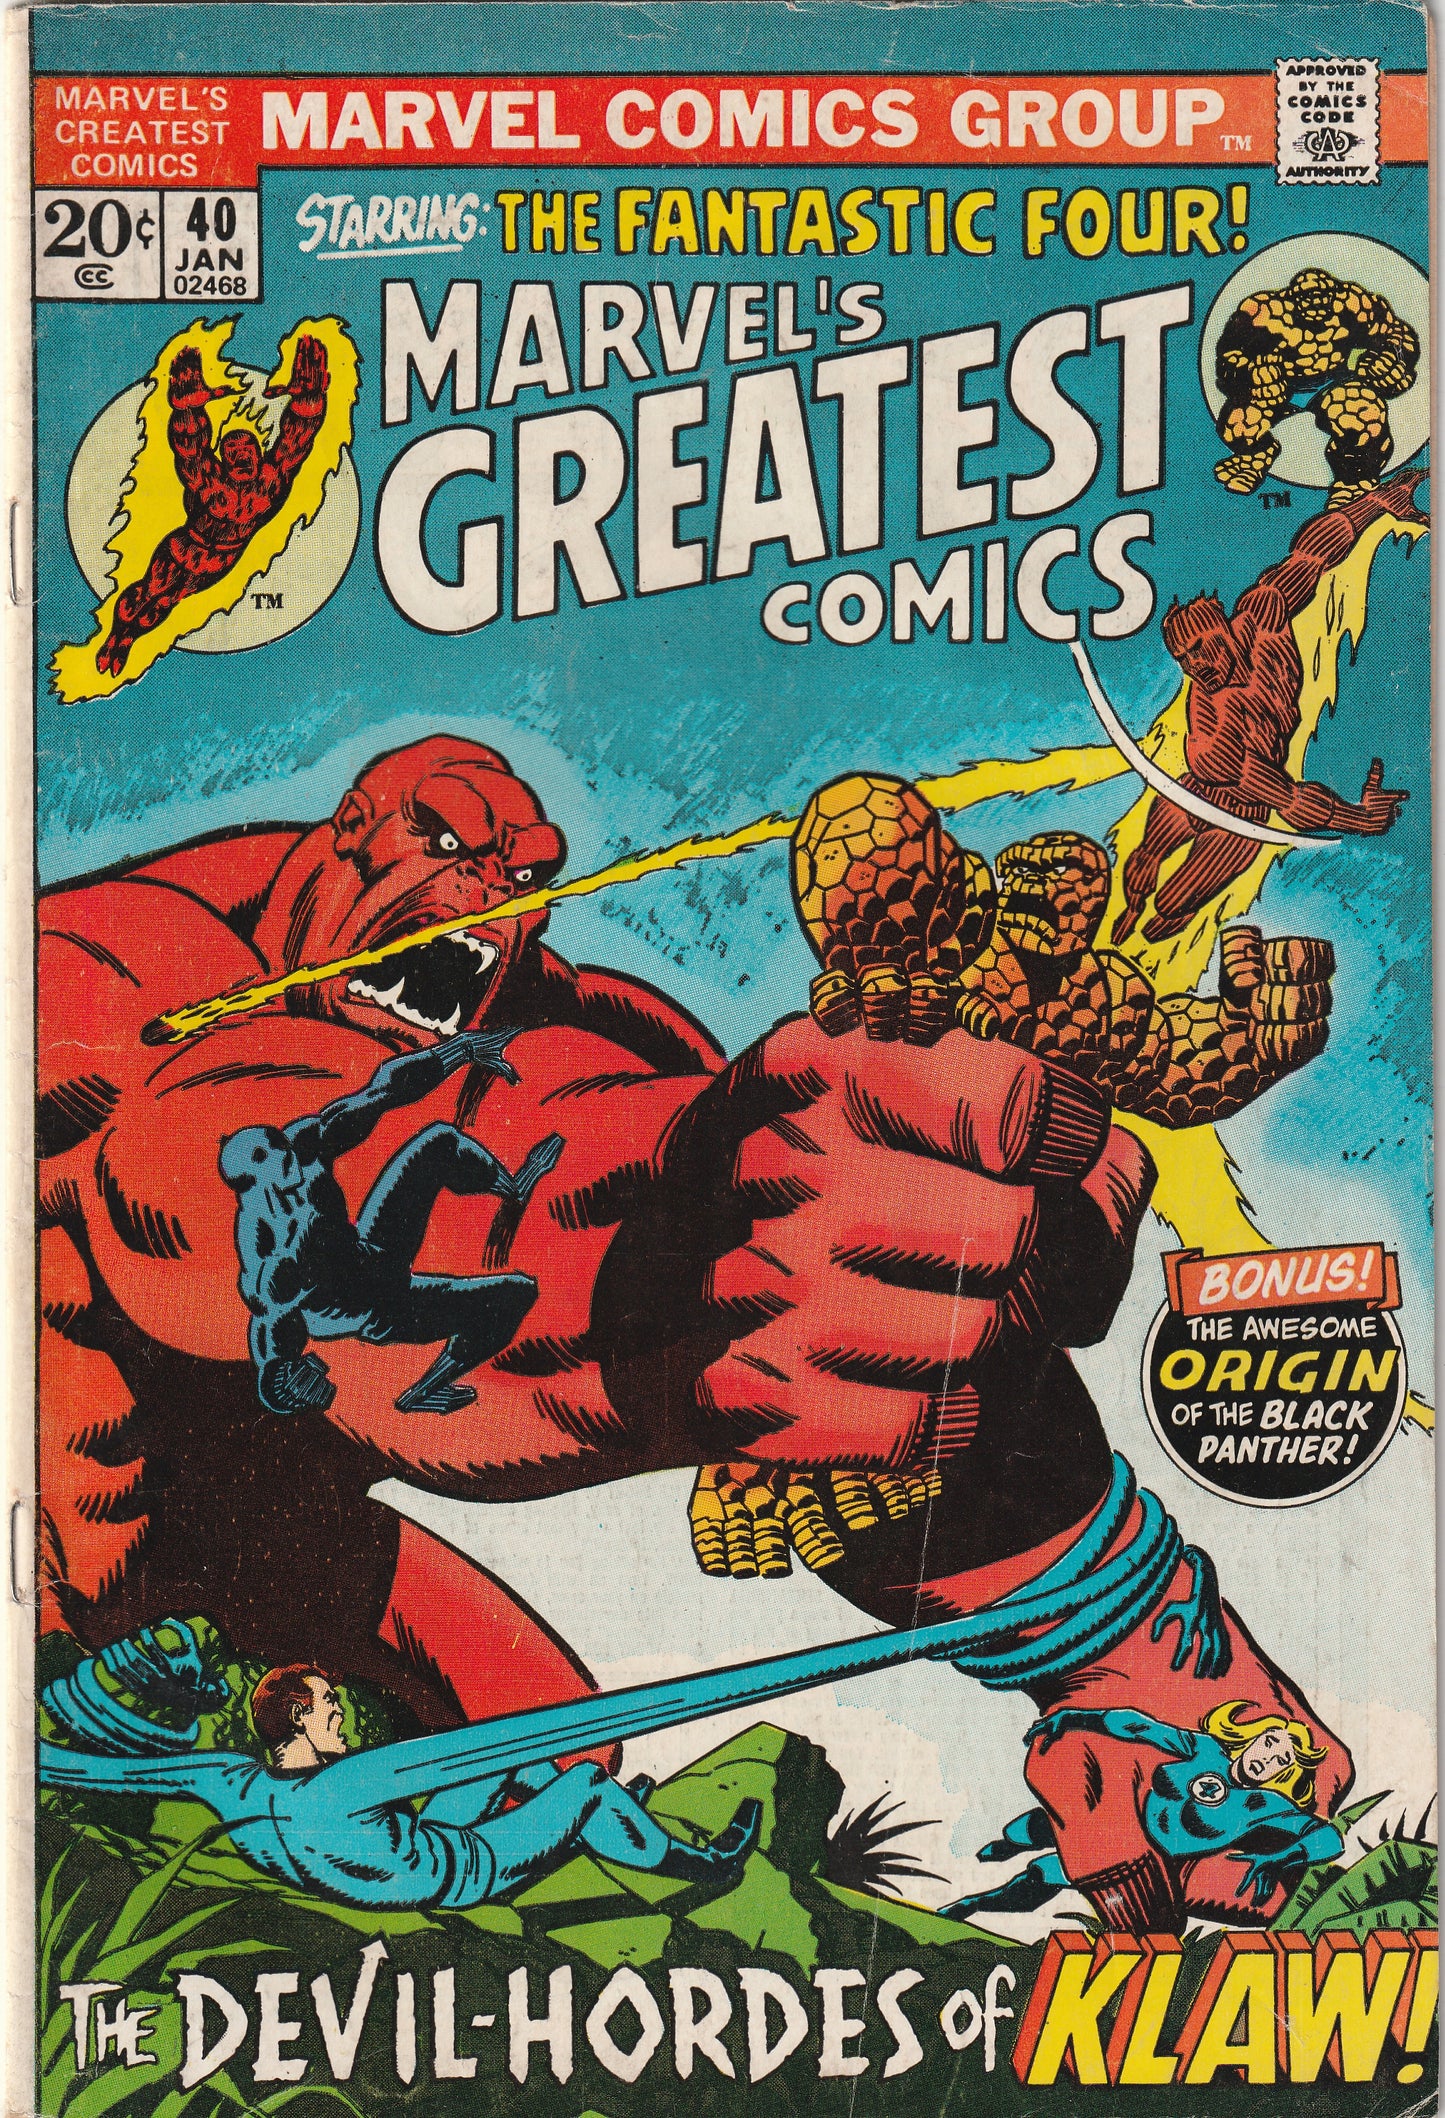 Marvel's Greatest Comics #40 (1973) - Origin of the Black Panther!